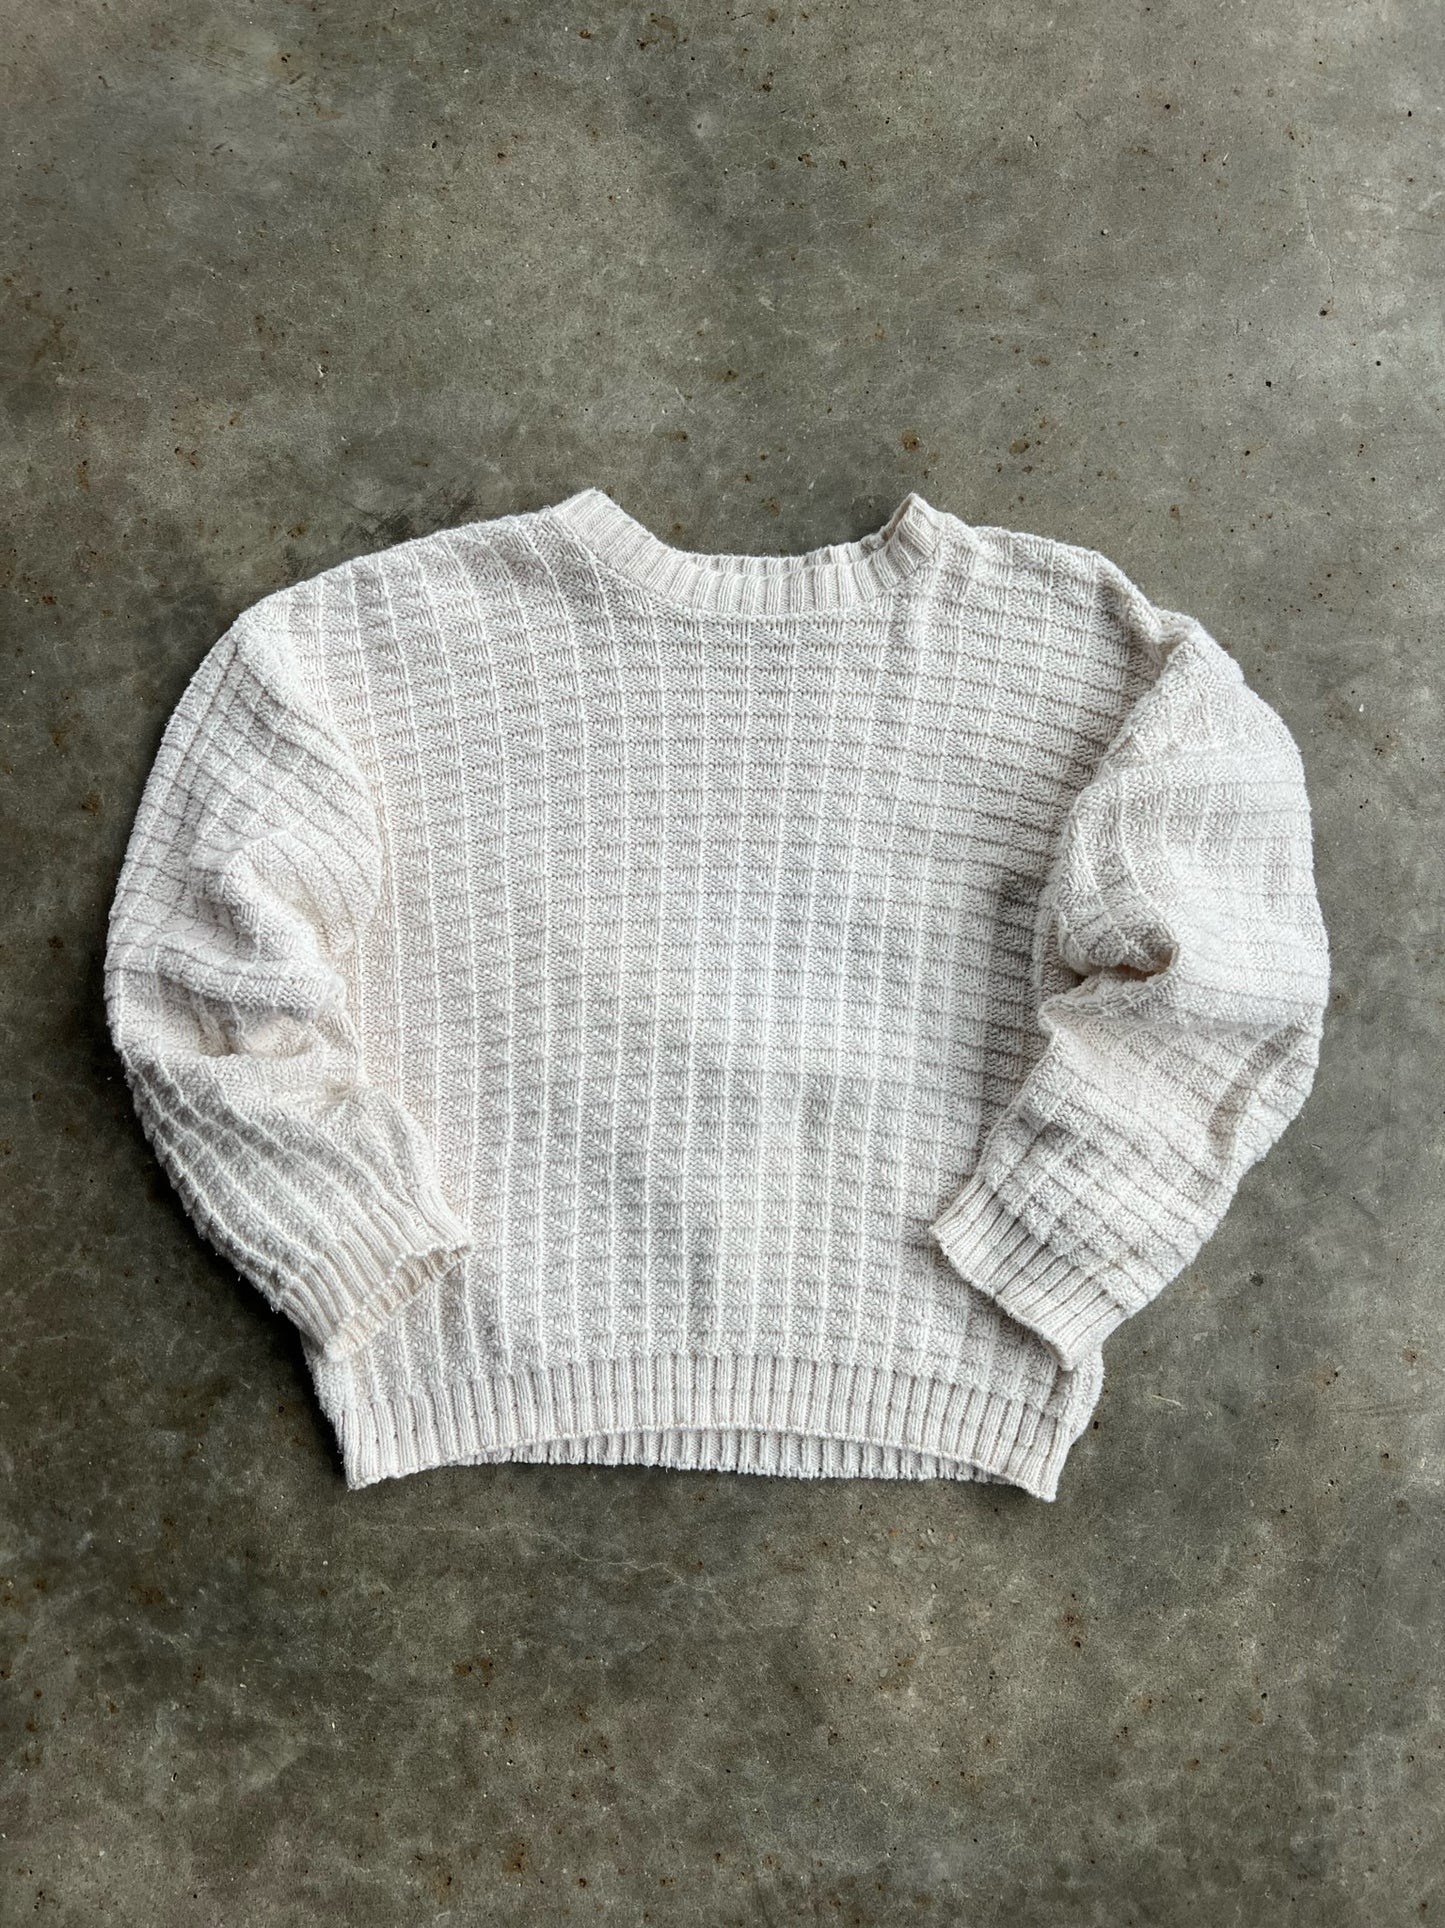 Vintage Tony Lambert Sweater - S